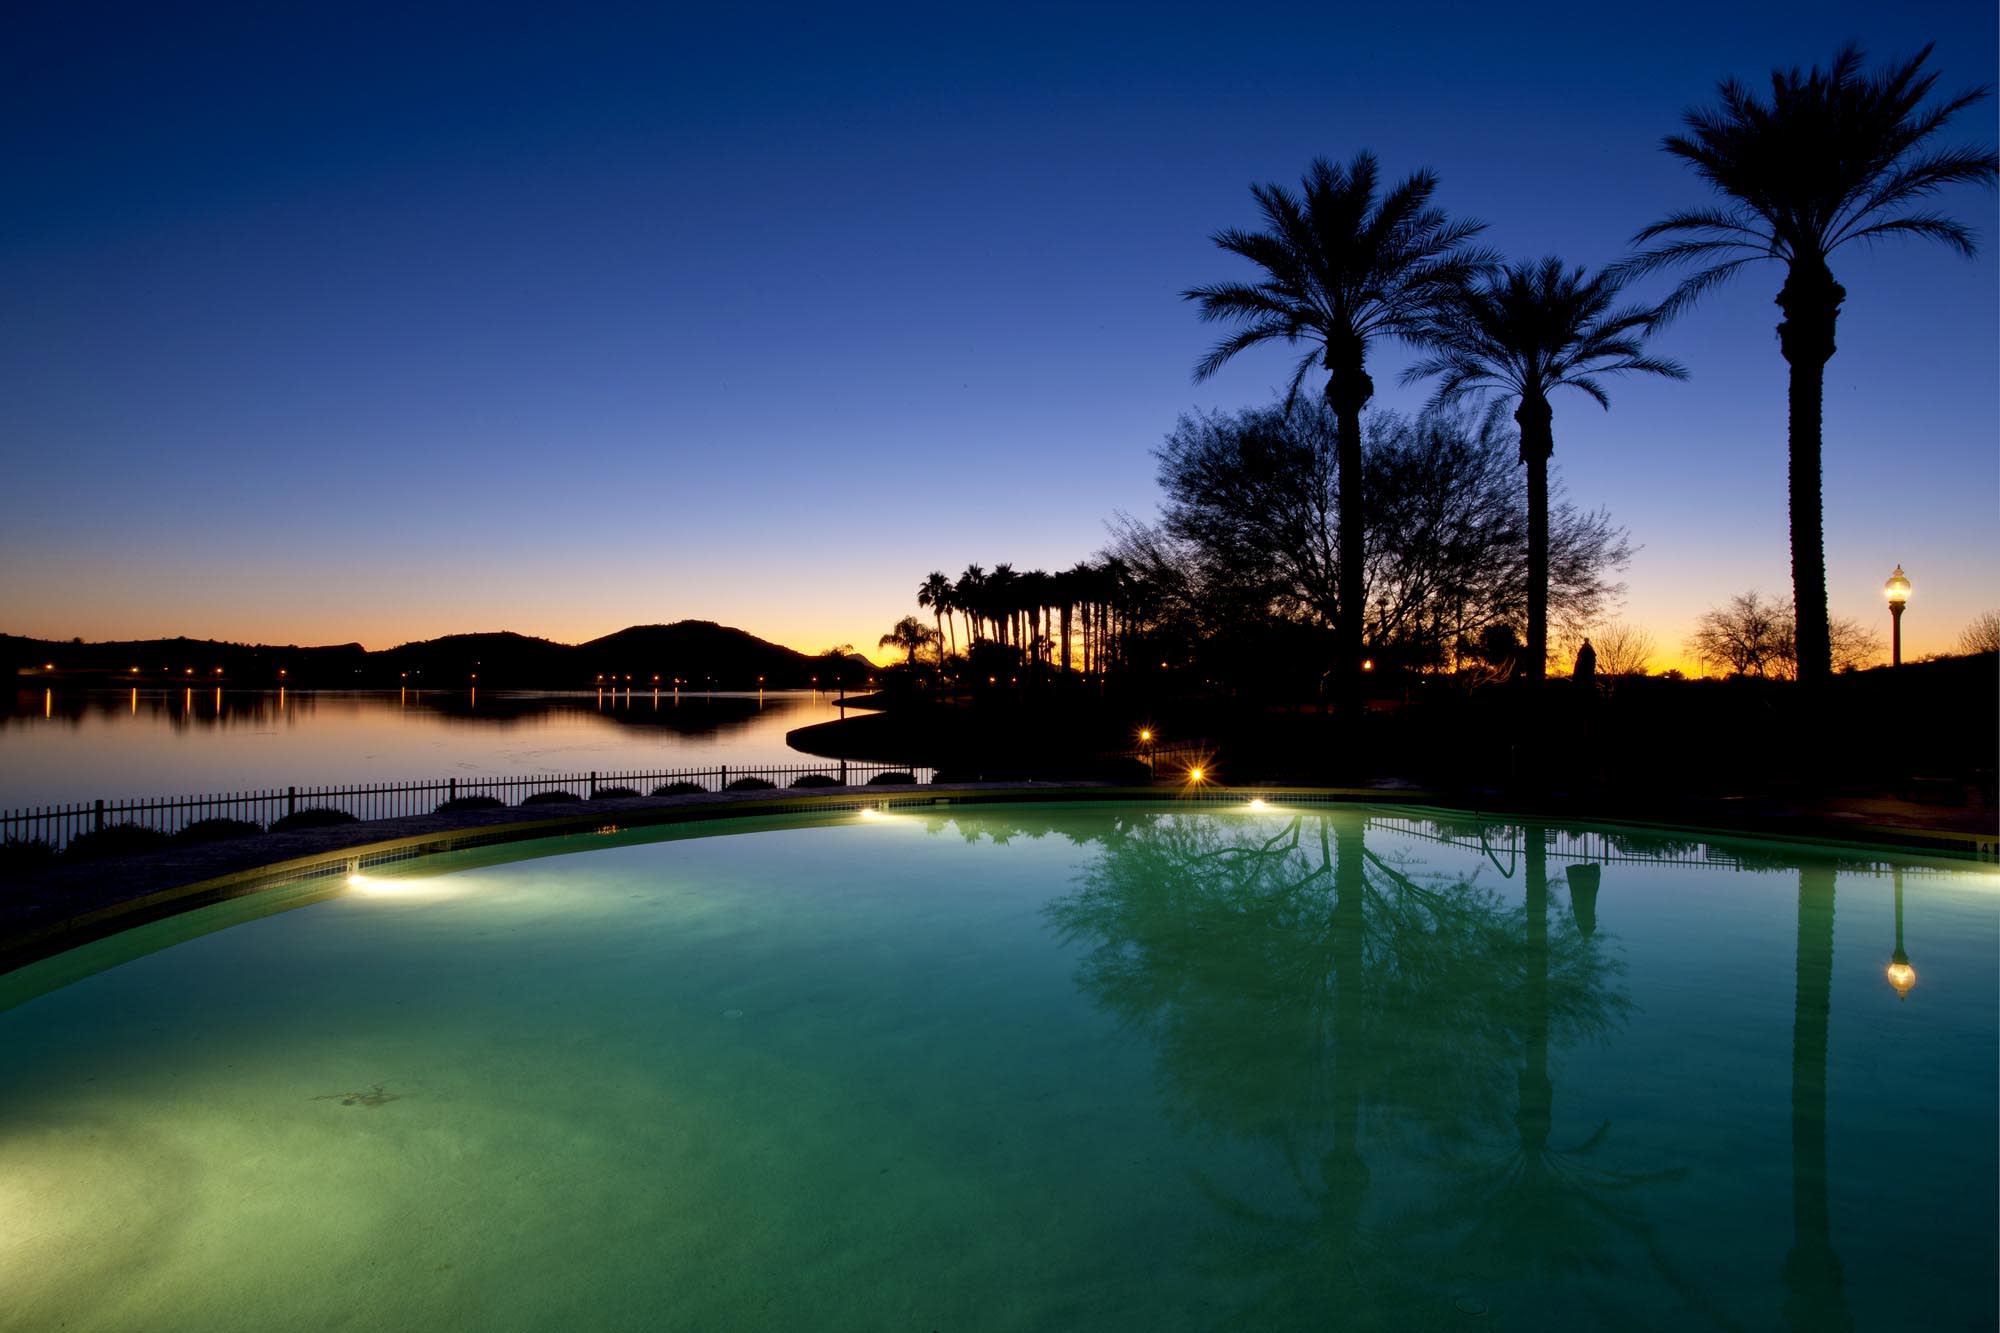 Starpointe Residence Club Resort Pool | Vidrio at Estrella | New homes in Goodyear, Arizona | Landsea Homes